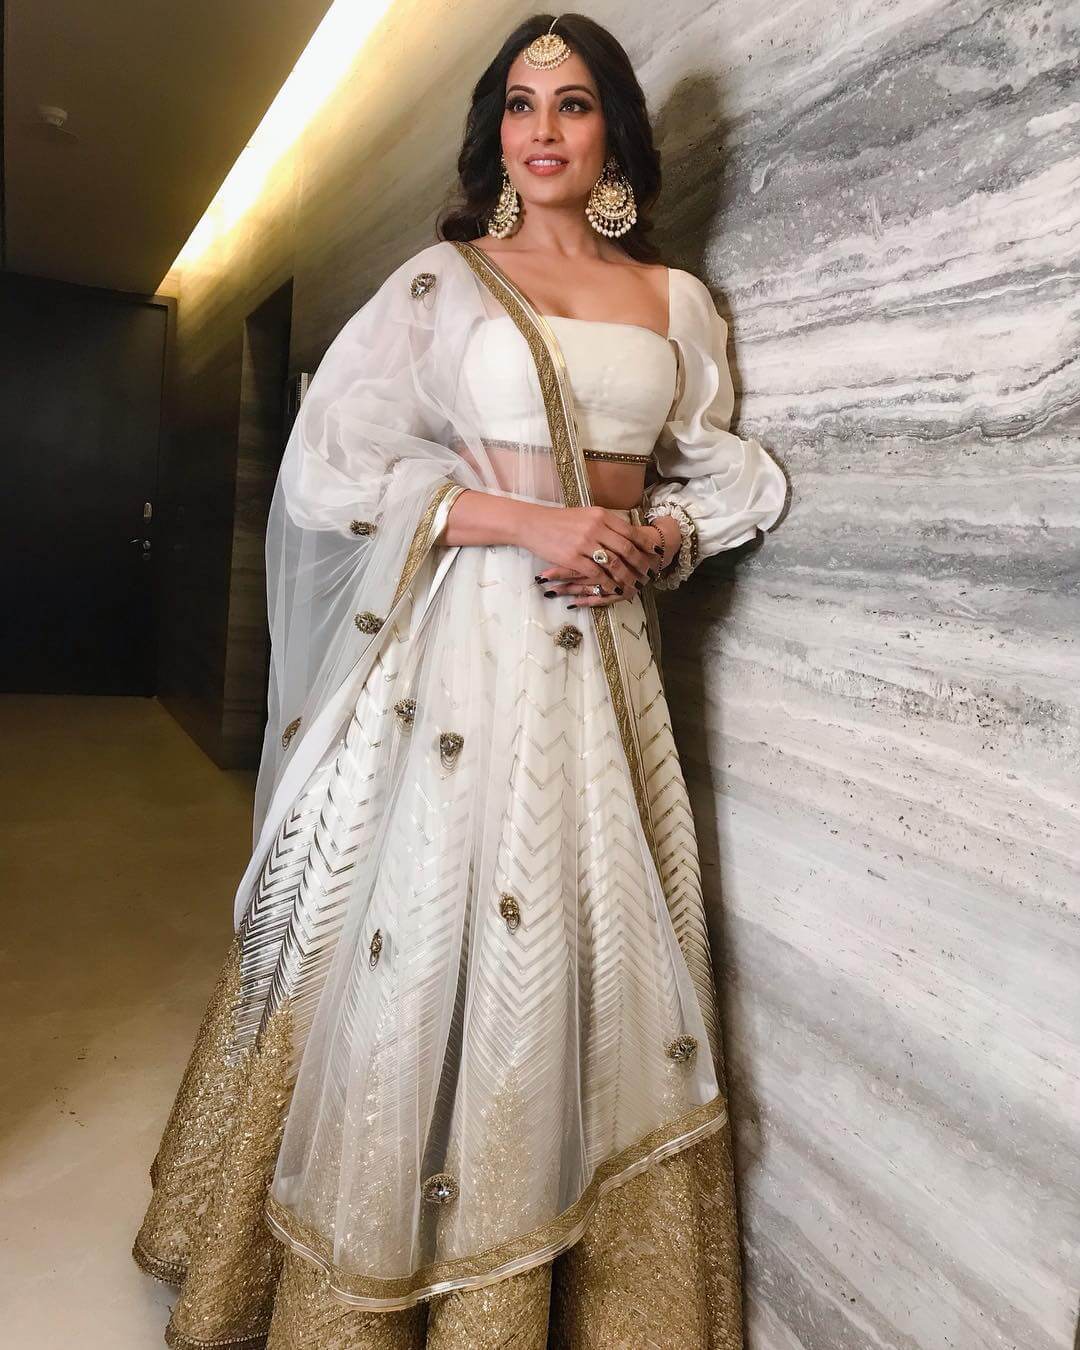 Bipasha Basu Look Mesmerizingly Beautiful In White Embellished Lehenga With Full Puffed Sleeves Blouse Perfect Bridesmaid Look